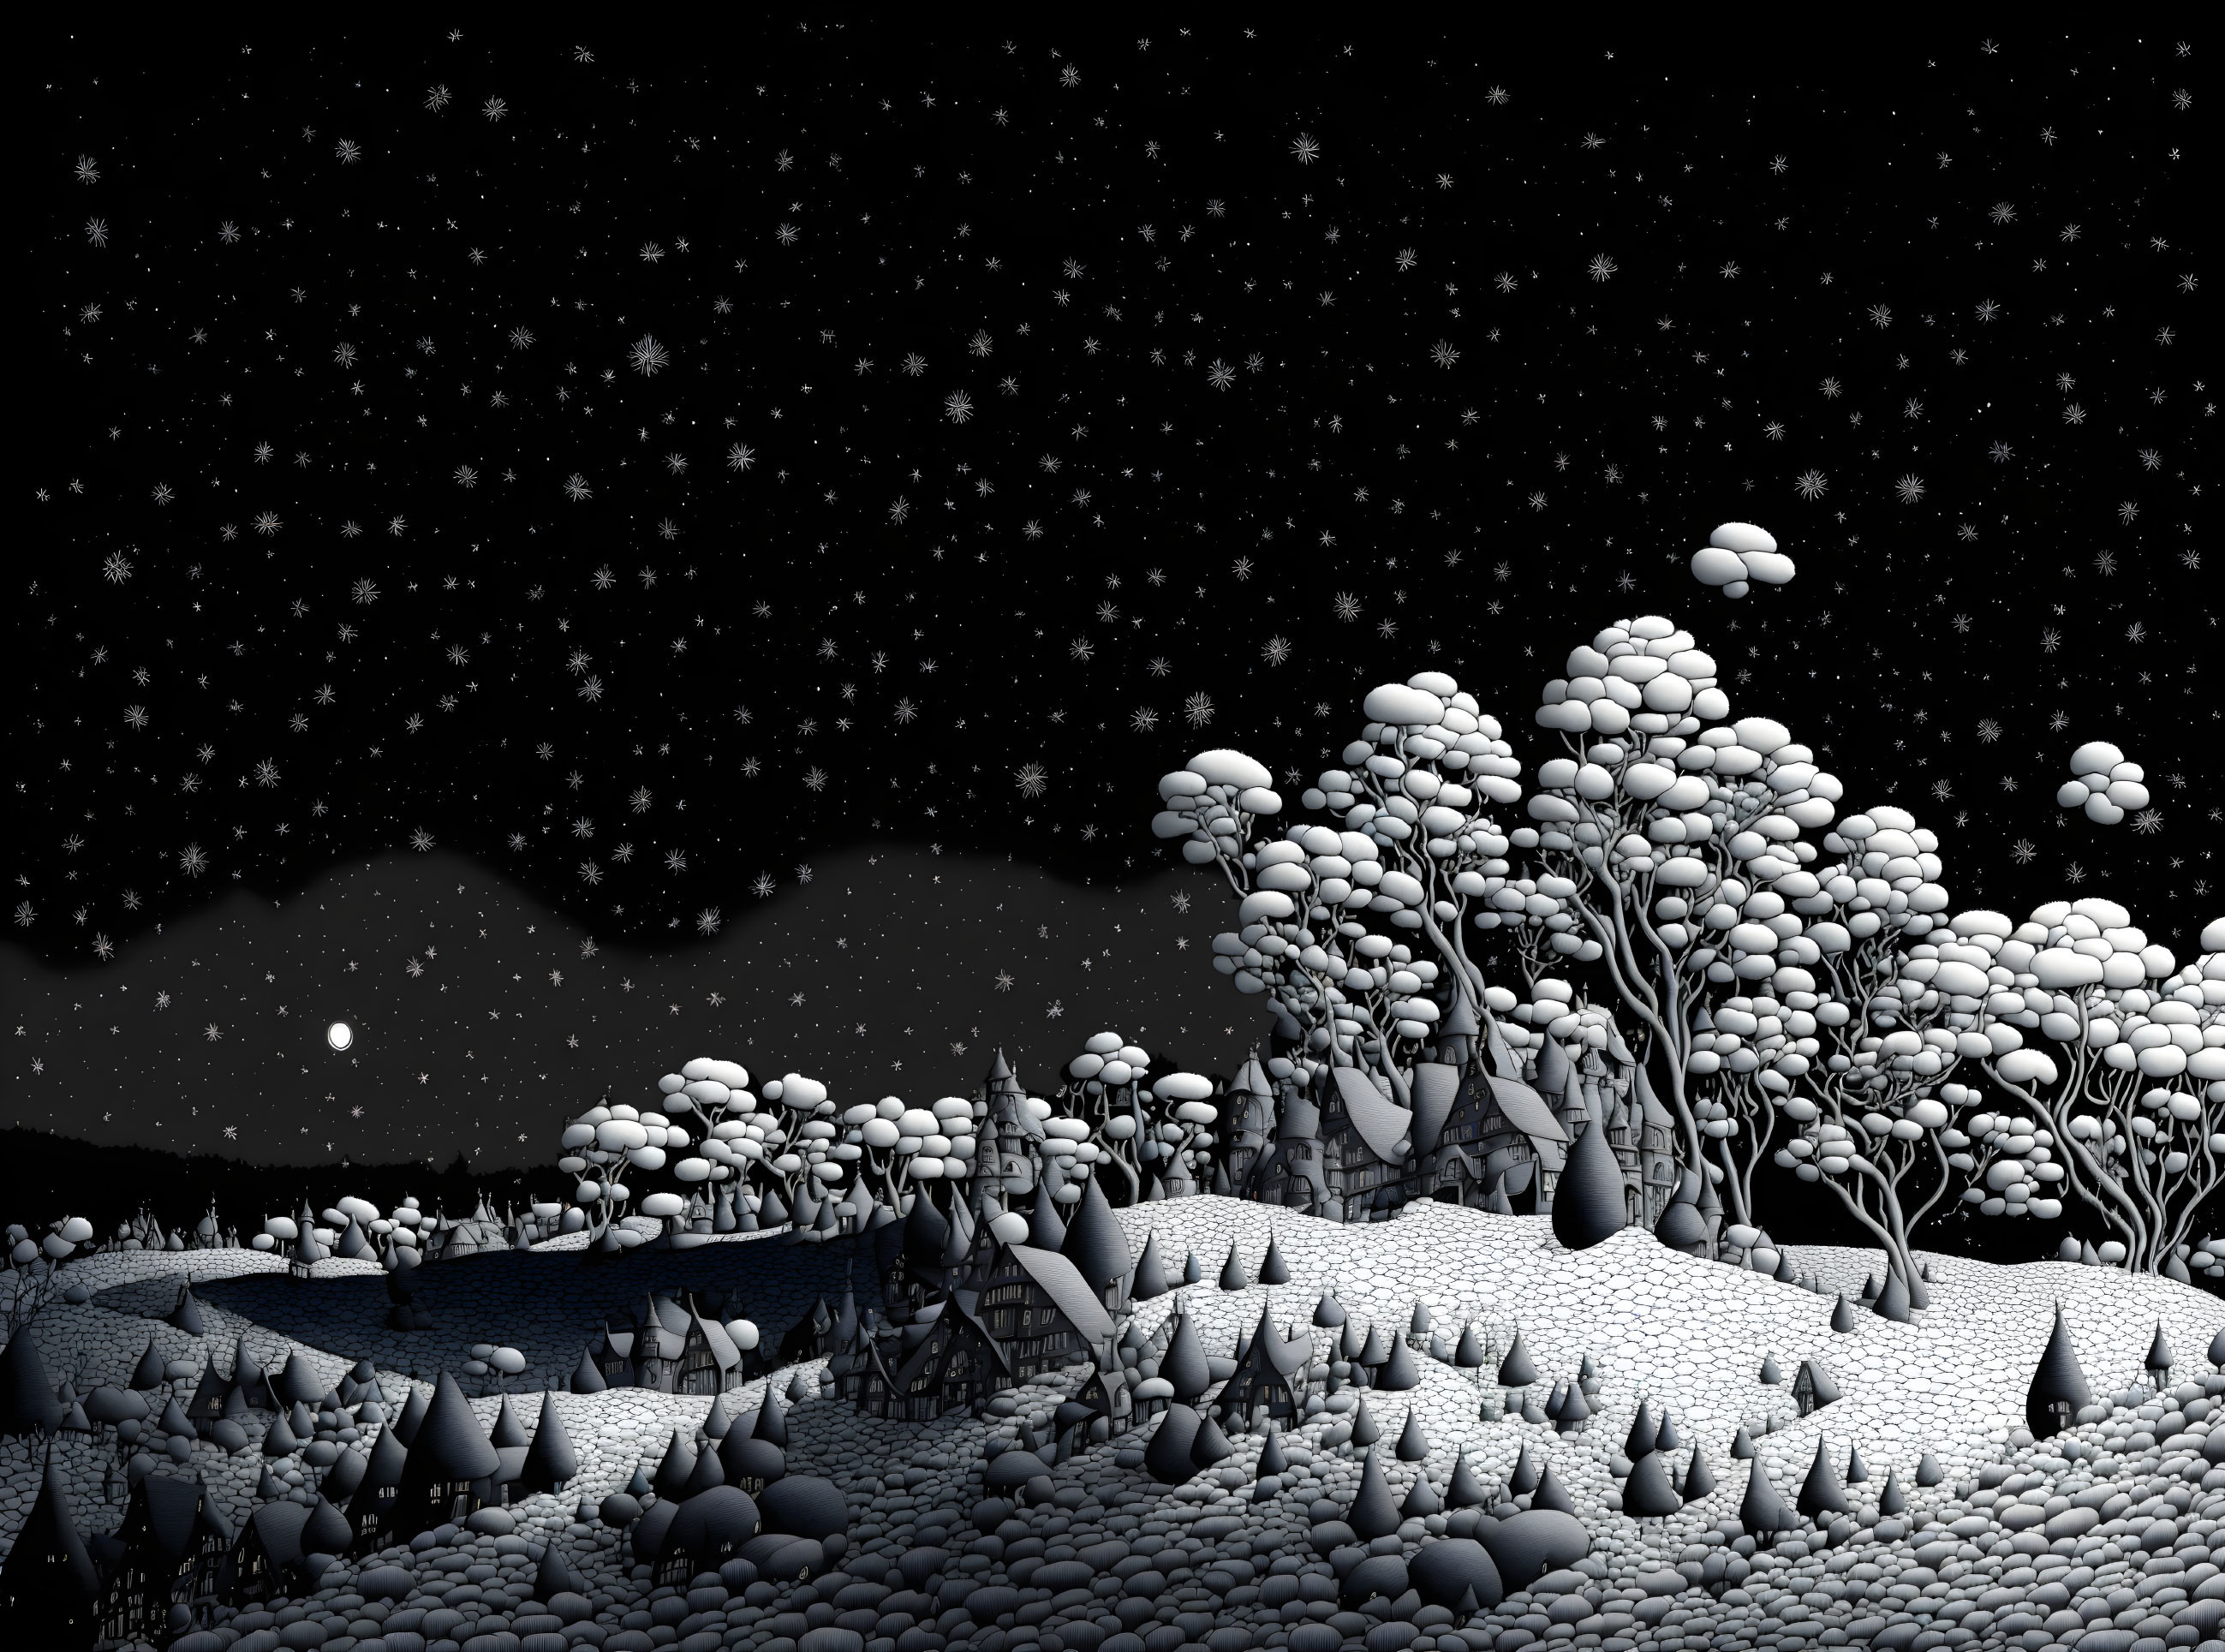 Monochrome snowy forest scene under starry sky